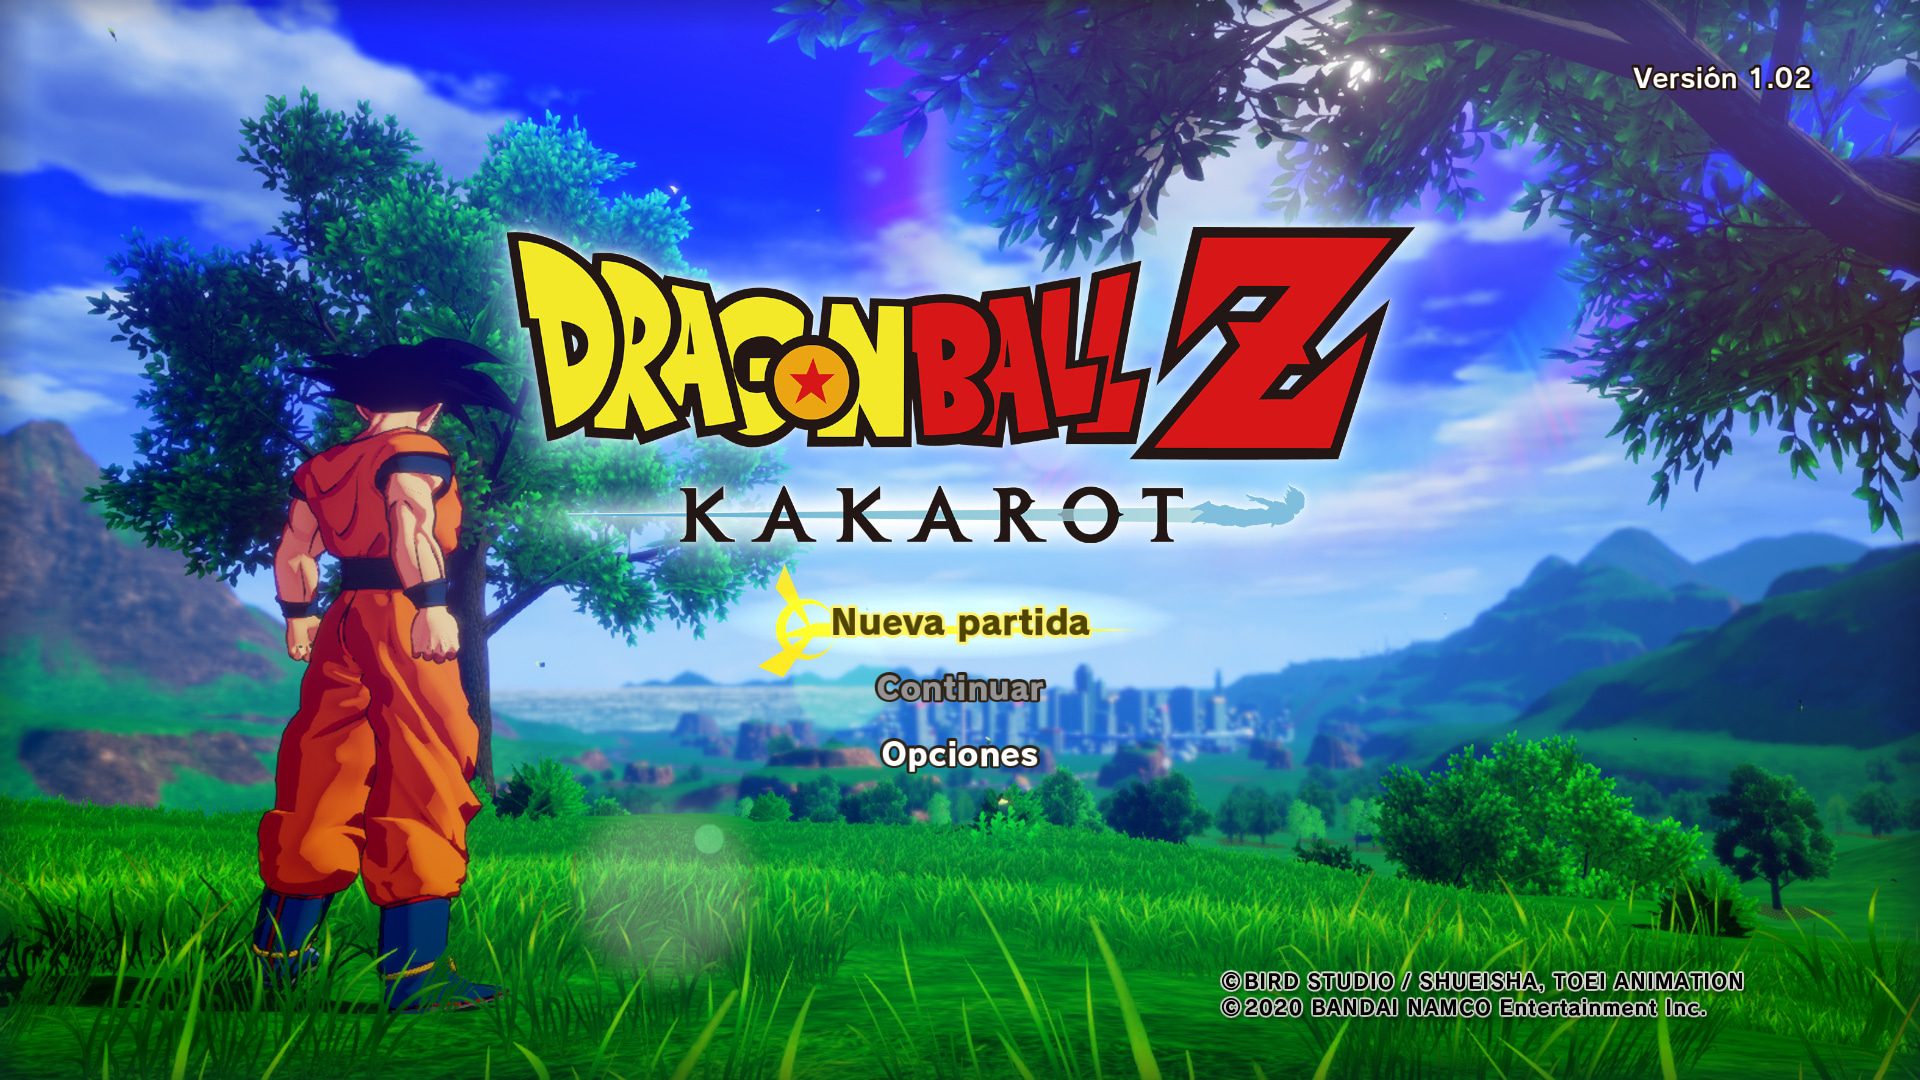 Análisis de Dragon Ball Z: Kakarot - Analizamos Dragon Ball Z: Kakarot, RPG basado en la creación de Akira Toriyama que nos lleva a viajar por historias ya conocidas de una forma muy especial.